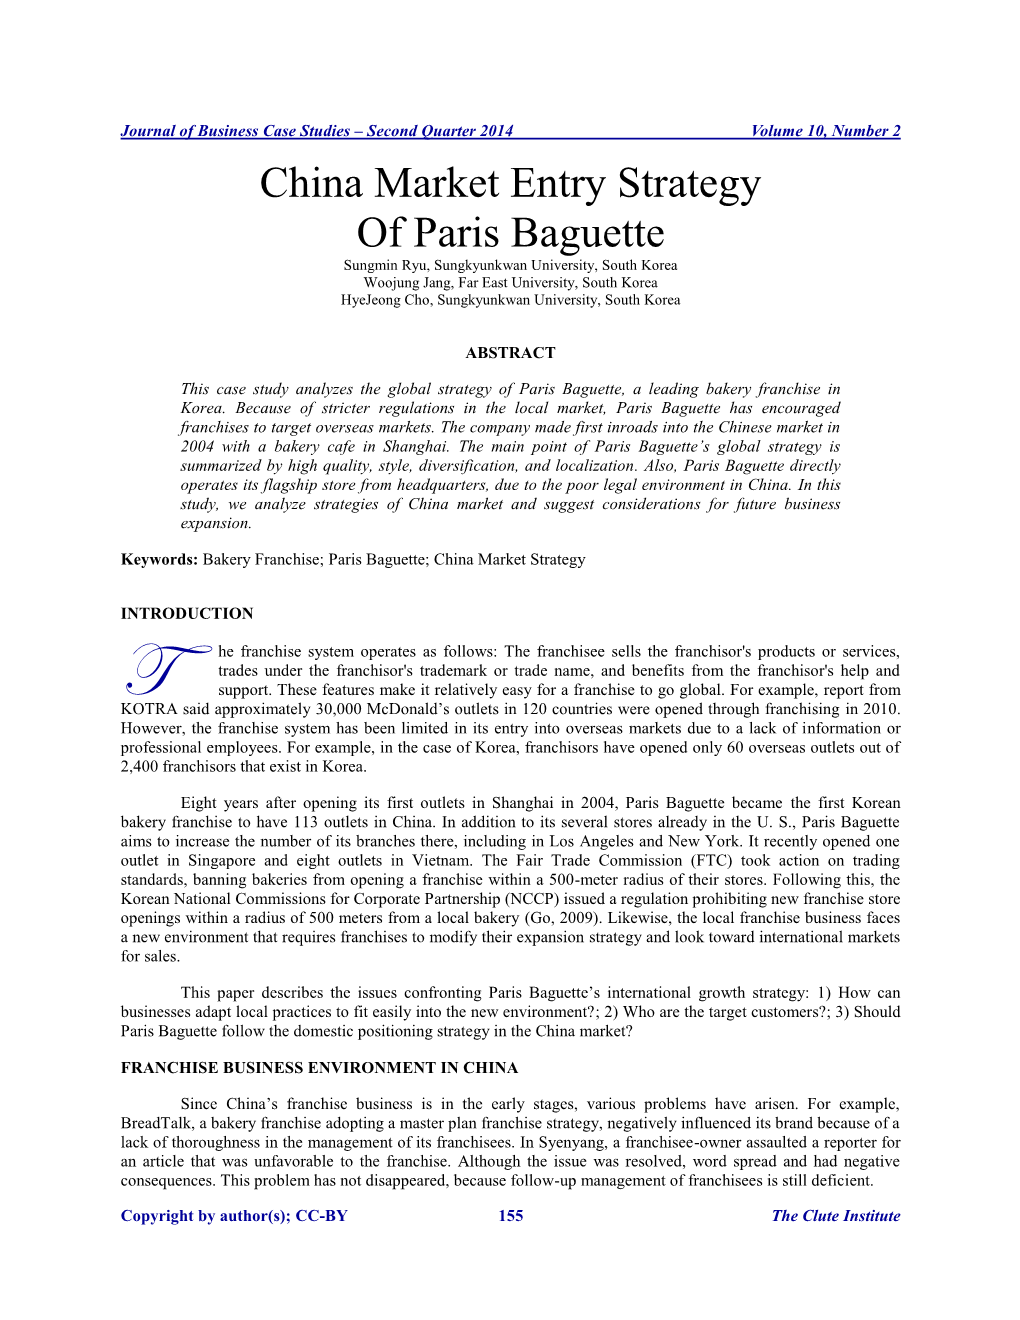 China Market Entry Strategy of Paris Baguette